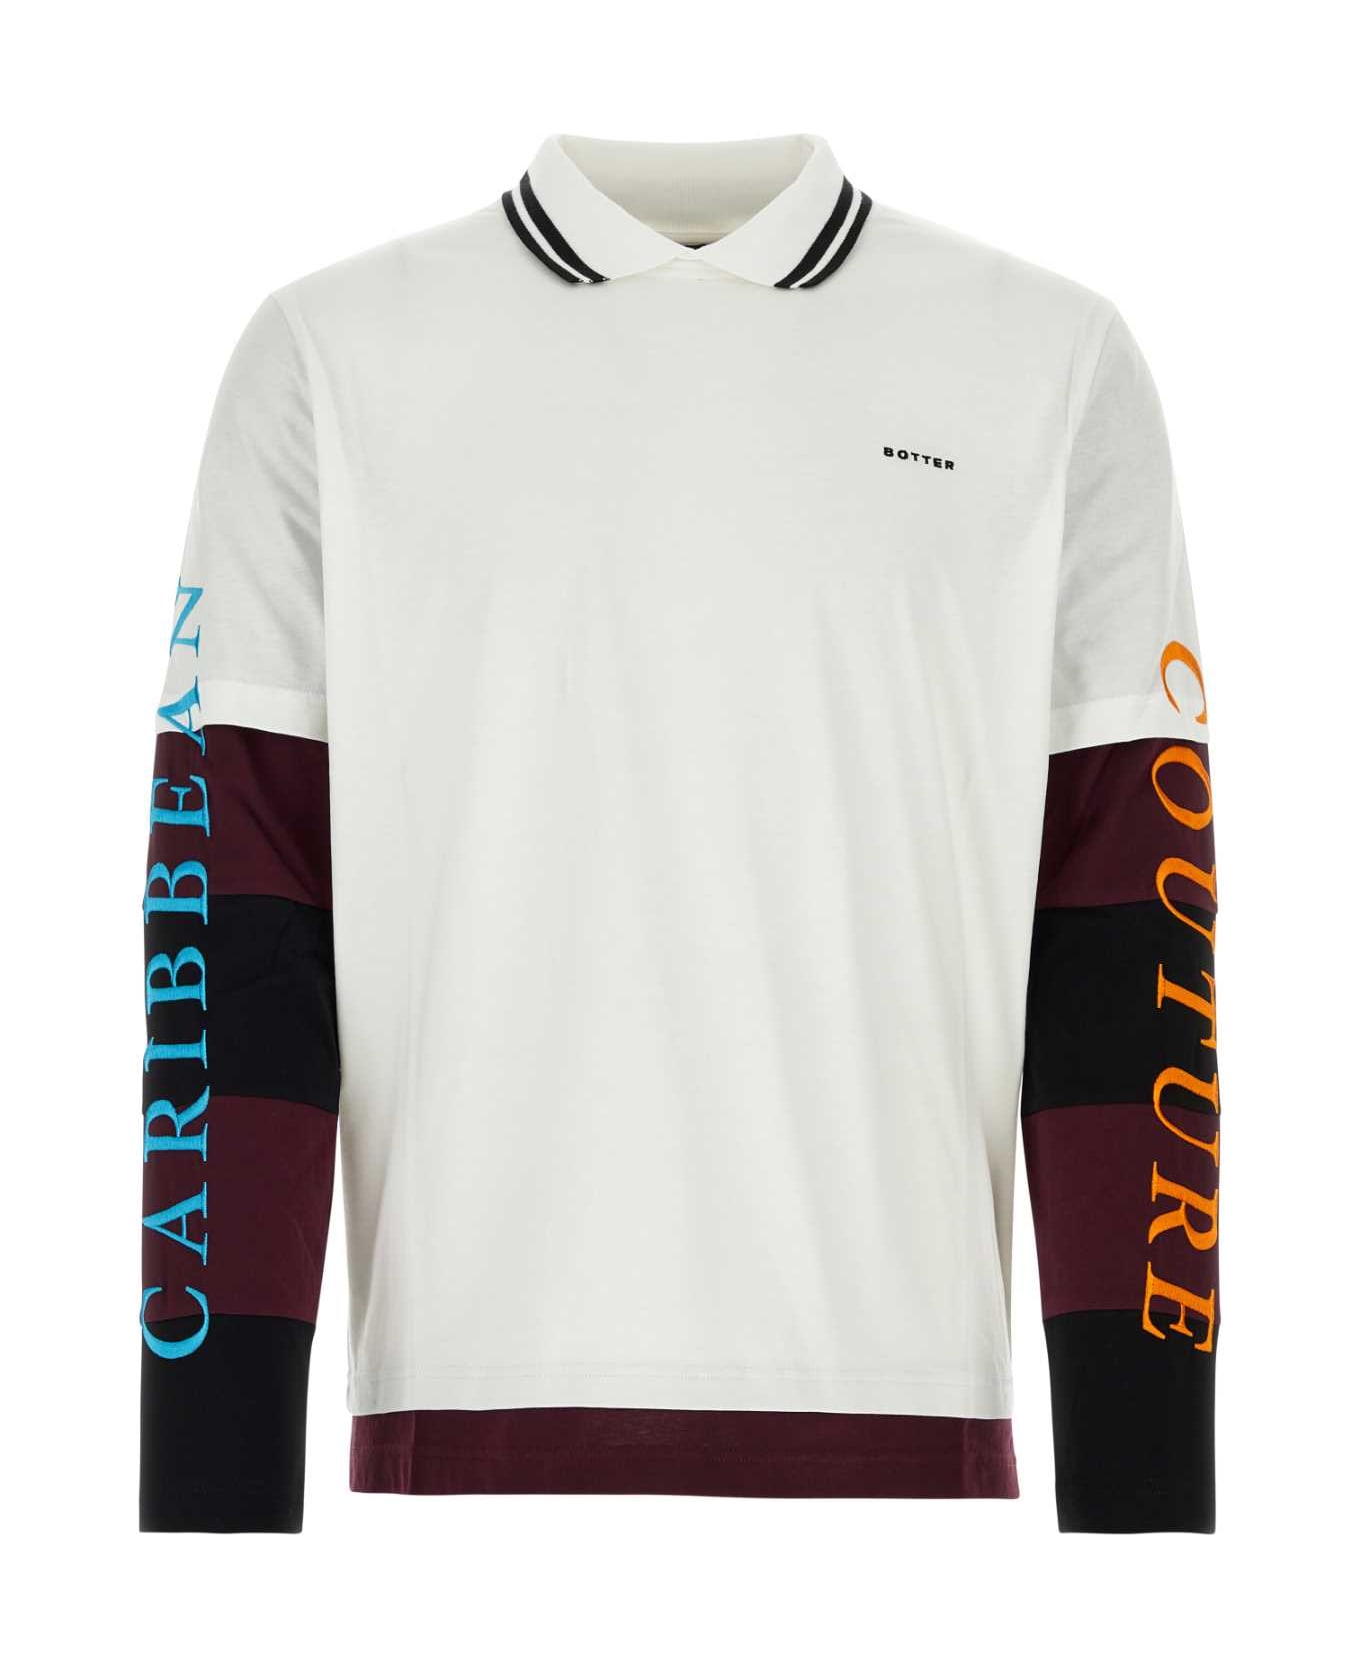 Botter Multicolor Cotton Polo Shirt - OFFWHITE BORDEAUSTR CARIB COUT